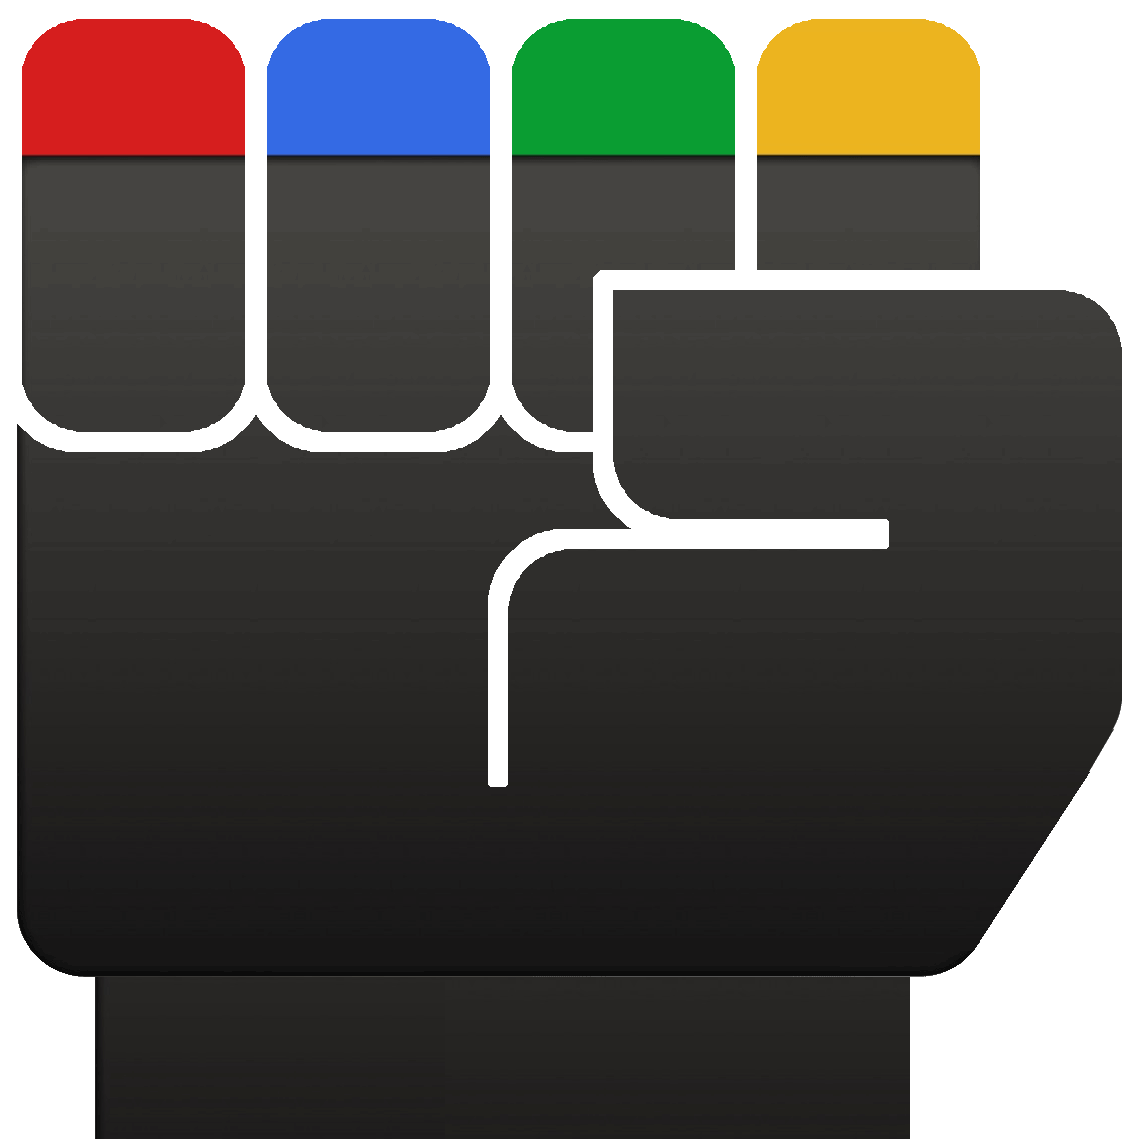 Google+ protest image